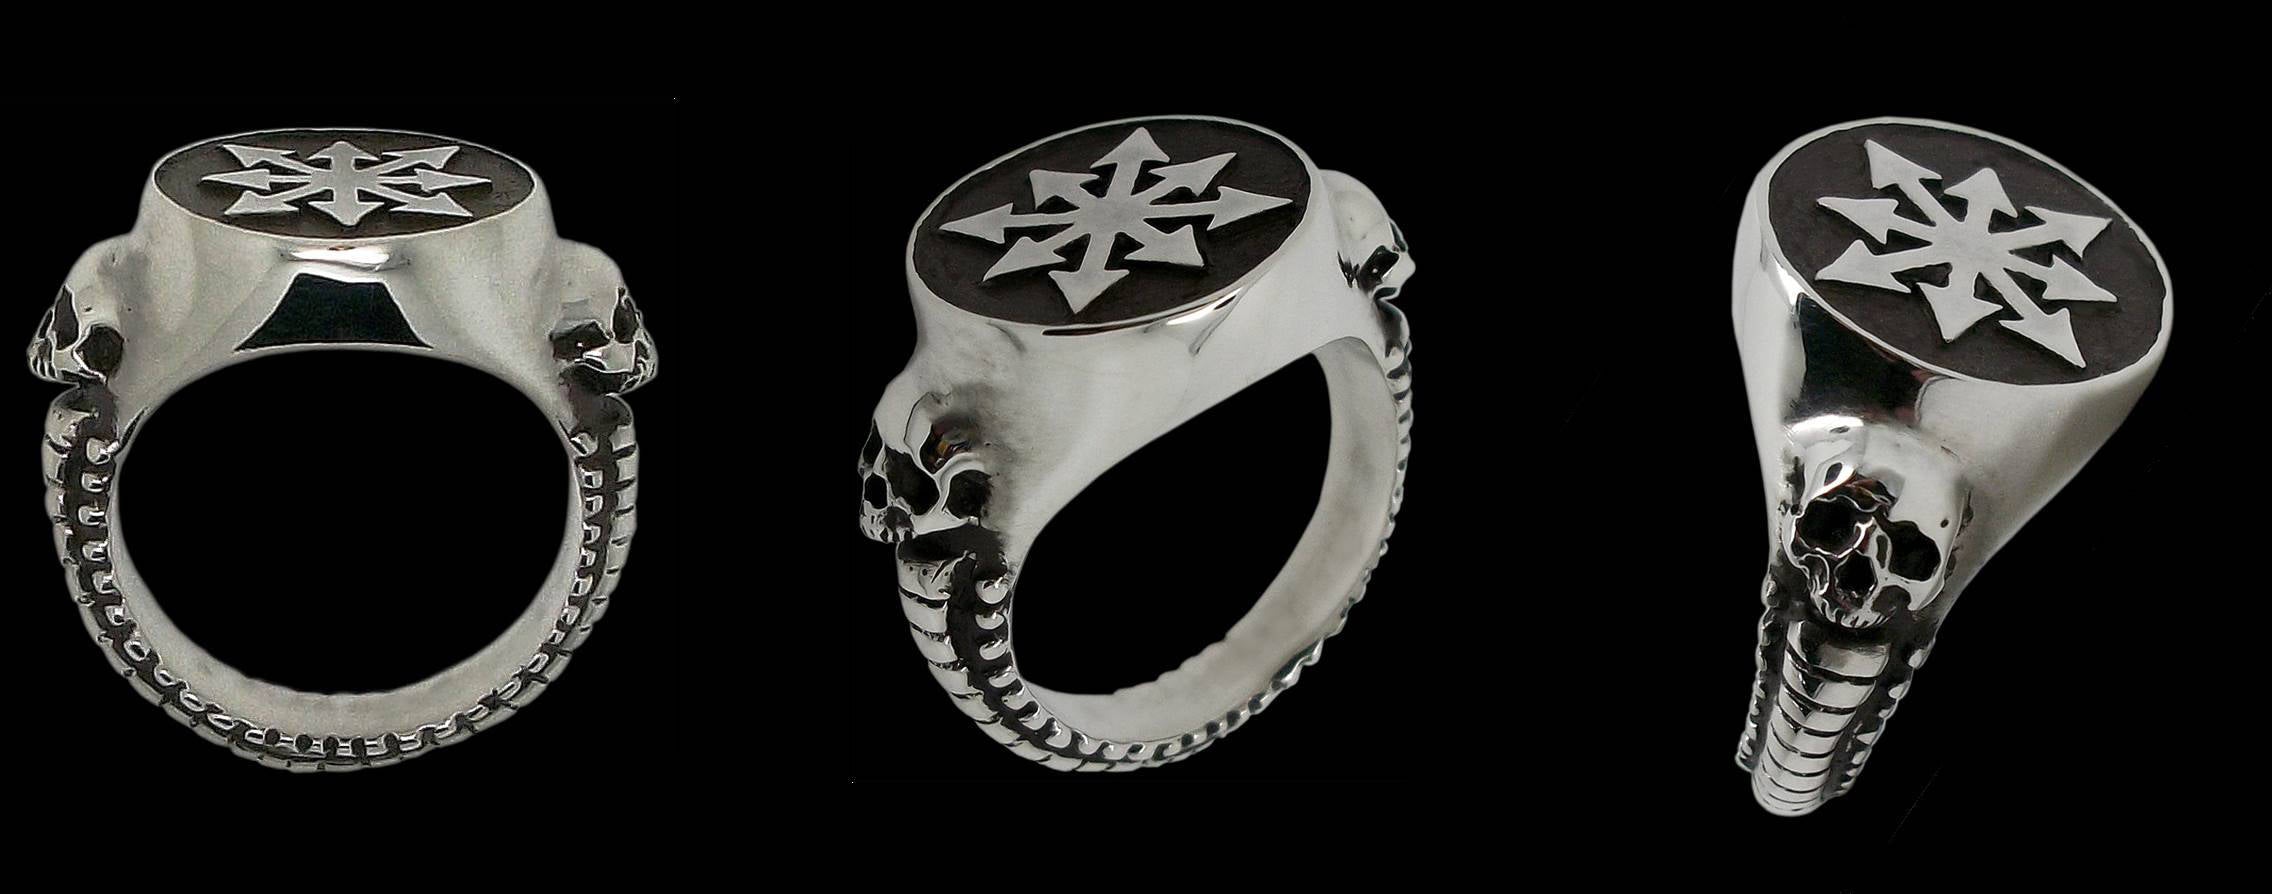 Skull ring - Sterling Silver Skull Chaos Ring -  ALL SIZES - Chaos Star